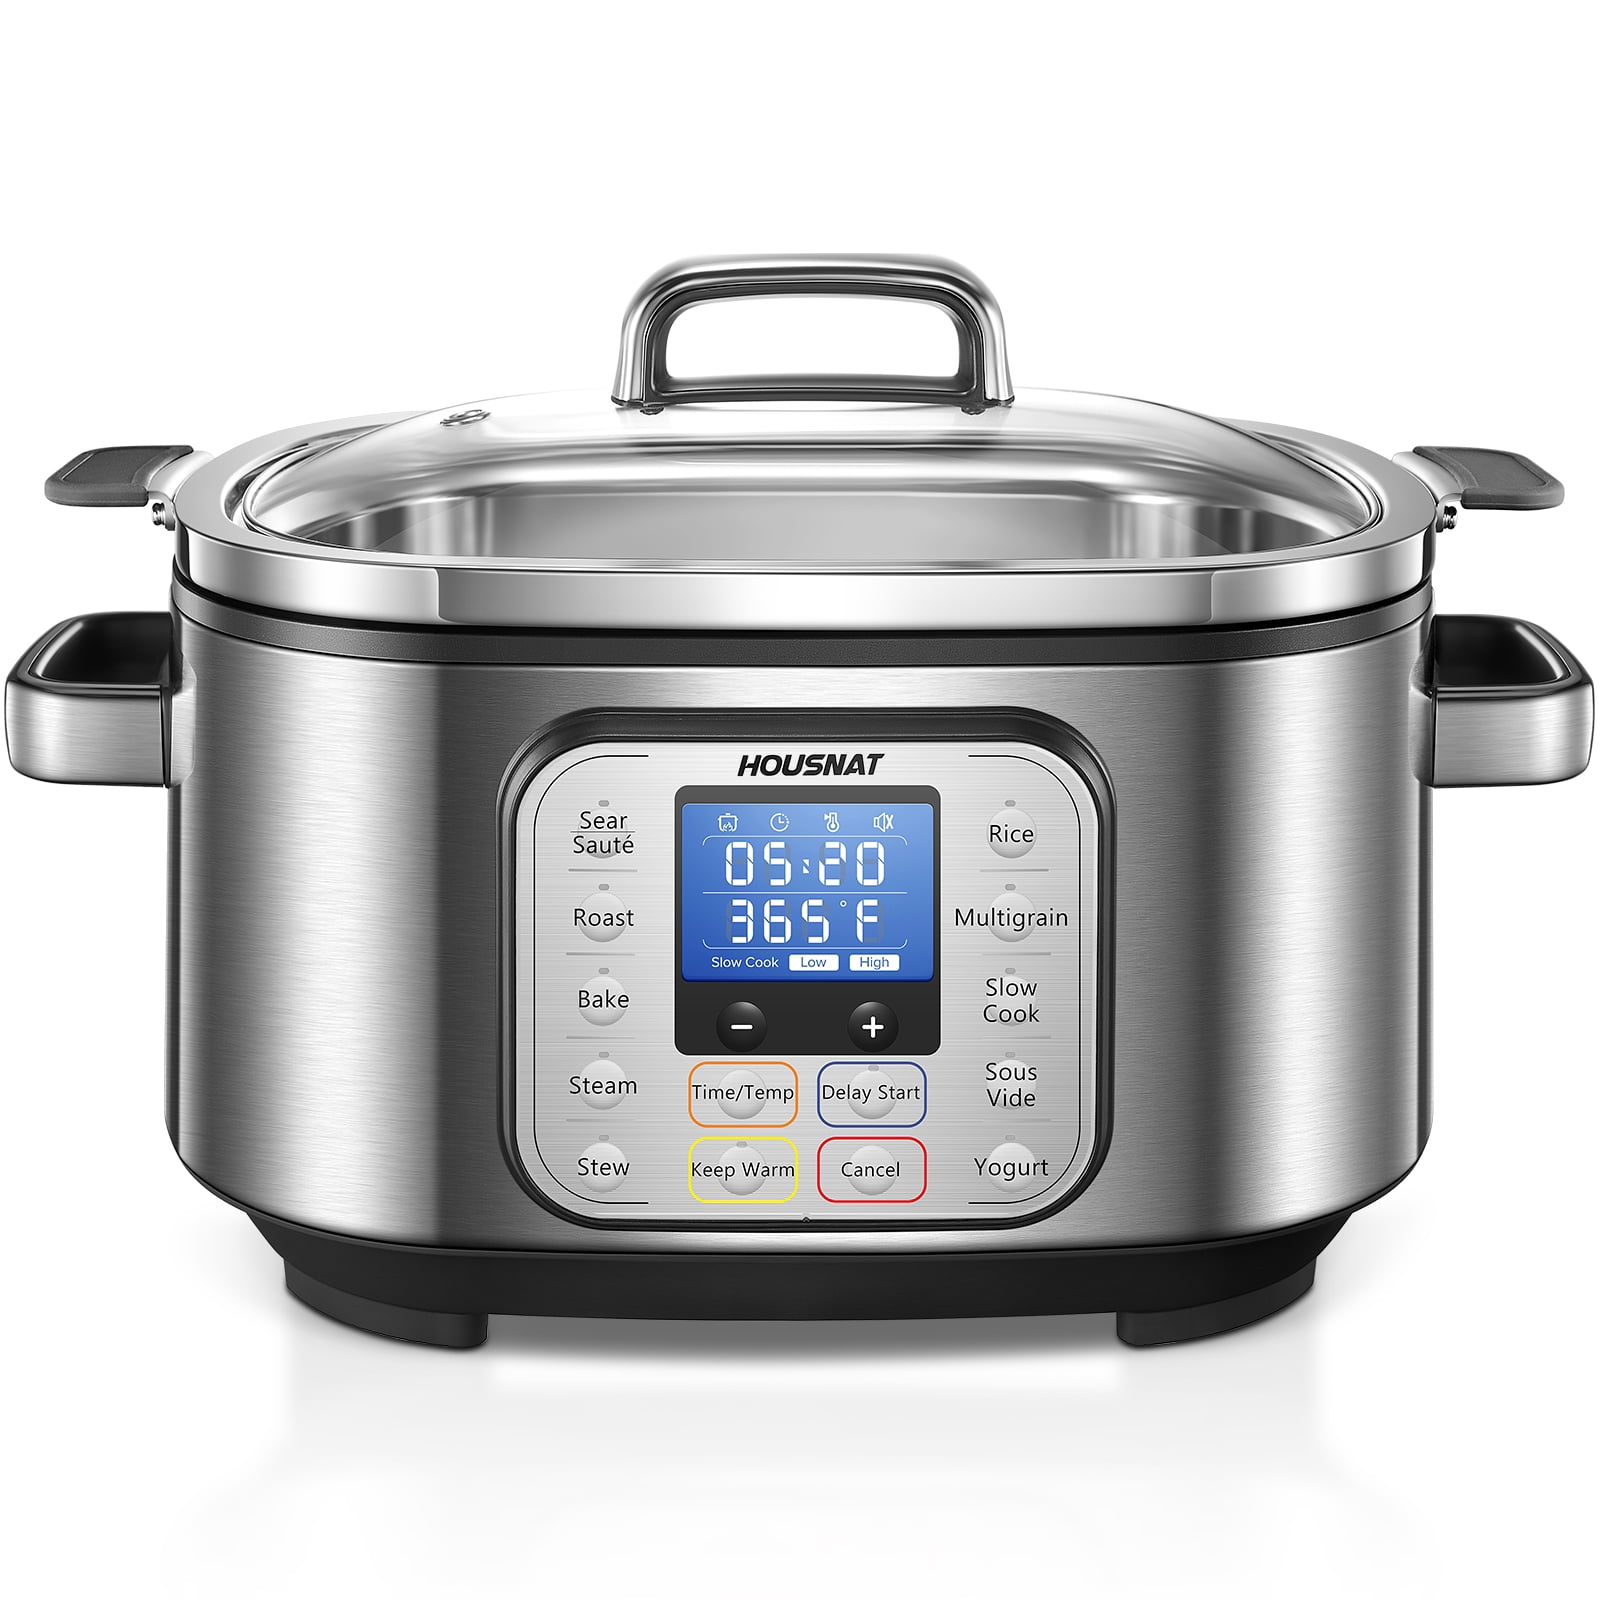 Crock-Pot 4.5 quart slow cooker - Making beef stew [unboxing